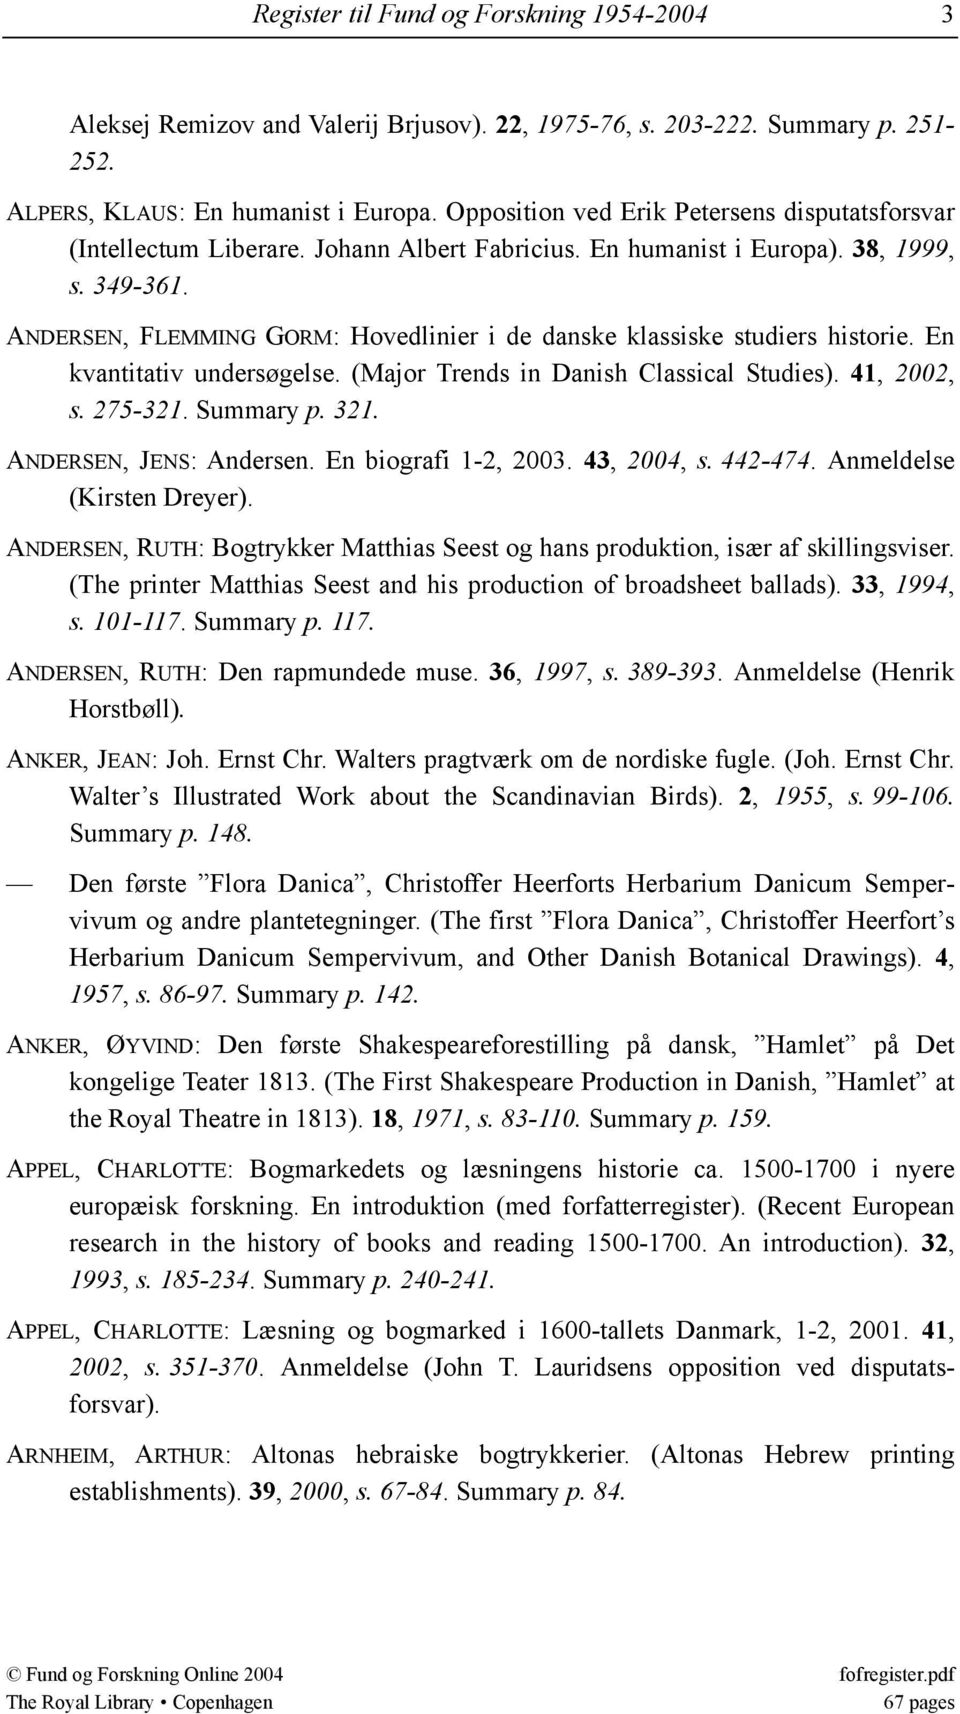 ANDERSEN, FLEMMING GORM: Hovedlinier i de danske klassiske studiers historie. En kvantitativ undersøgelse. (Major Trends in Danish Classical Studies). 41, 2002, s. 275-321. Summary p. 321.